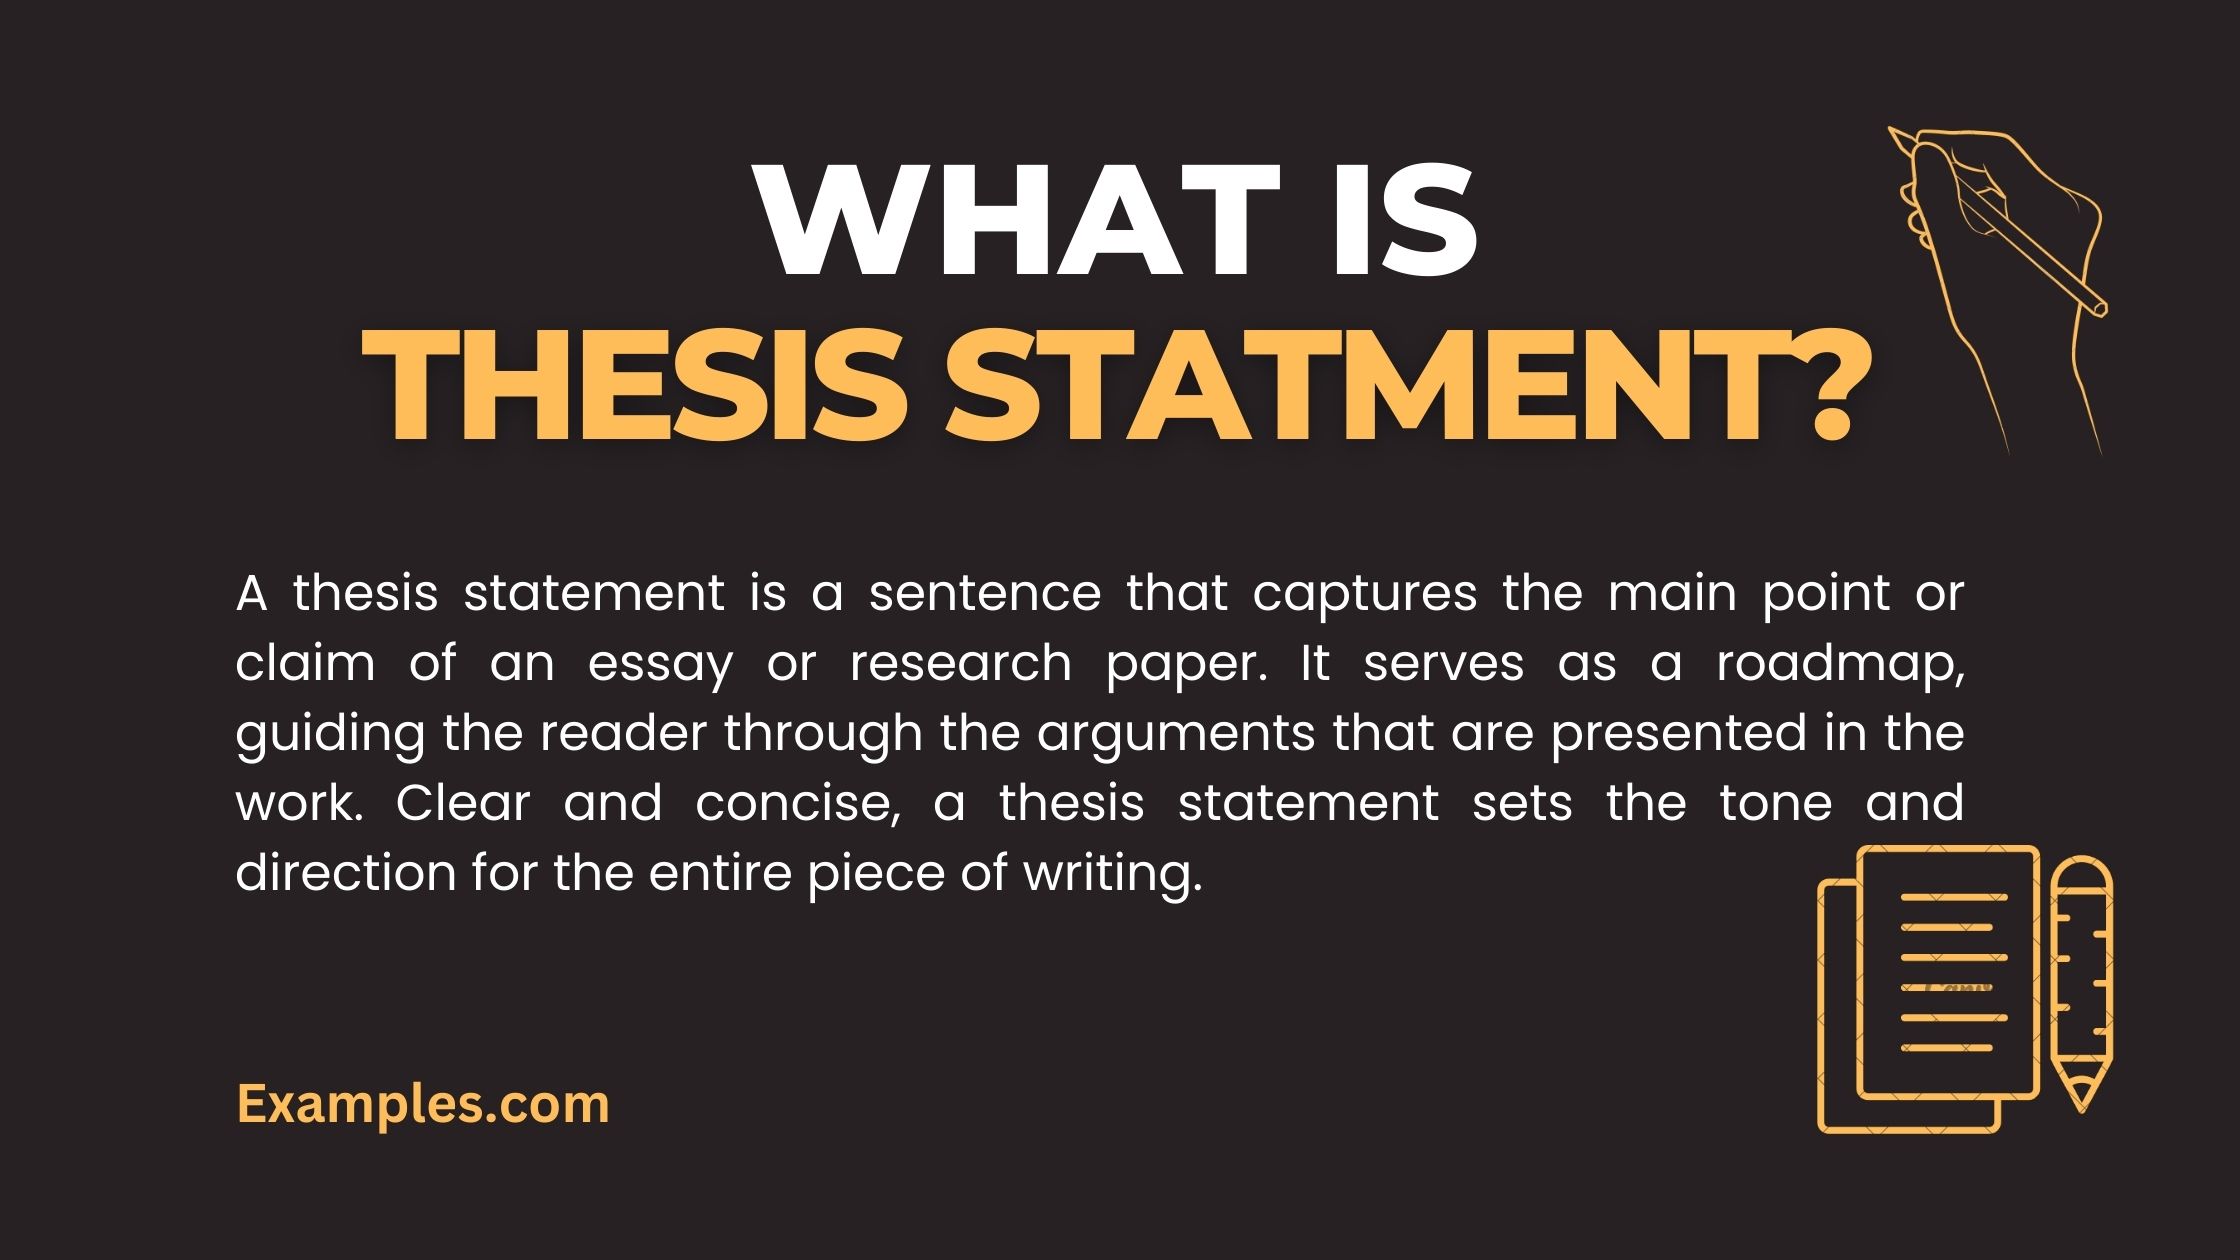 what makes thesis statement unique